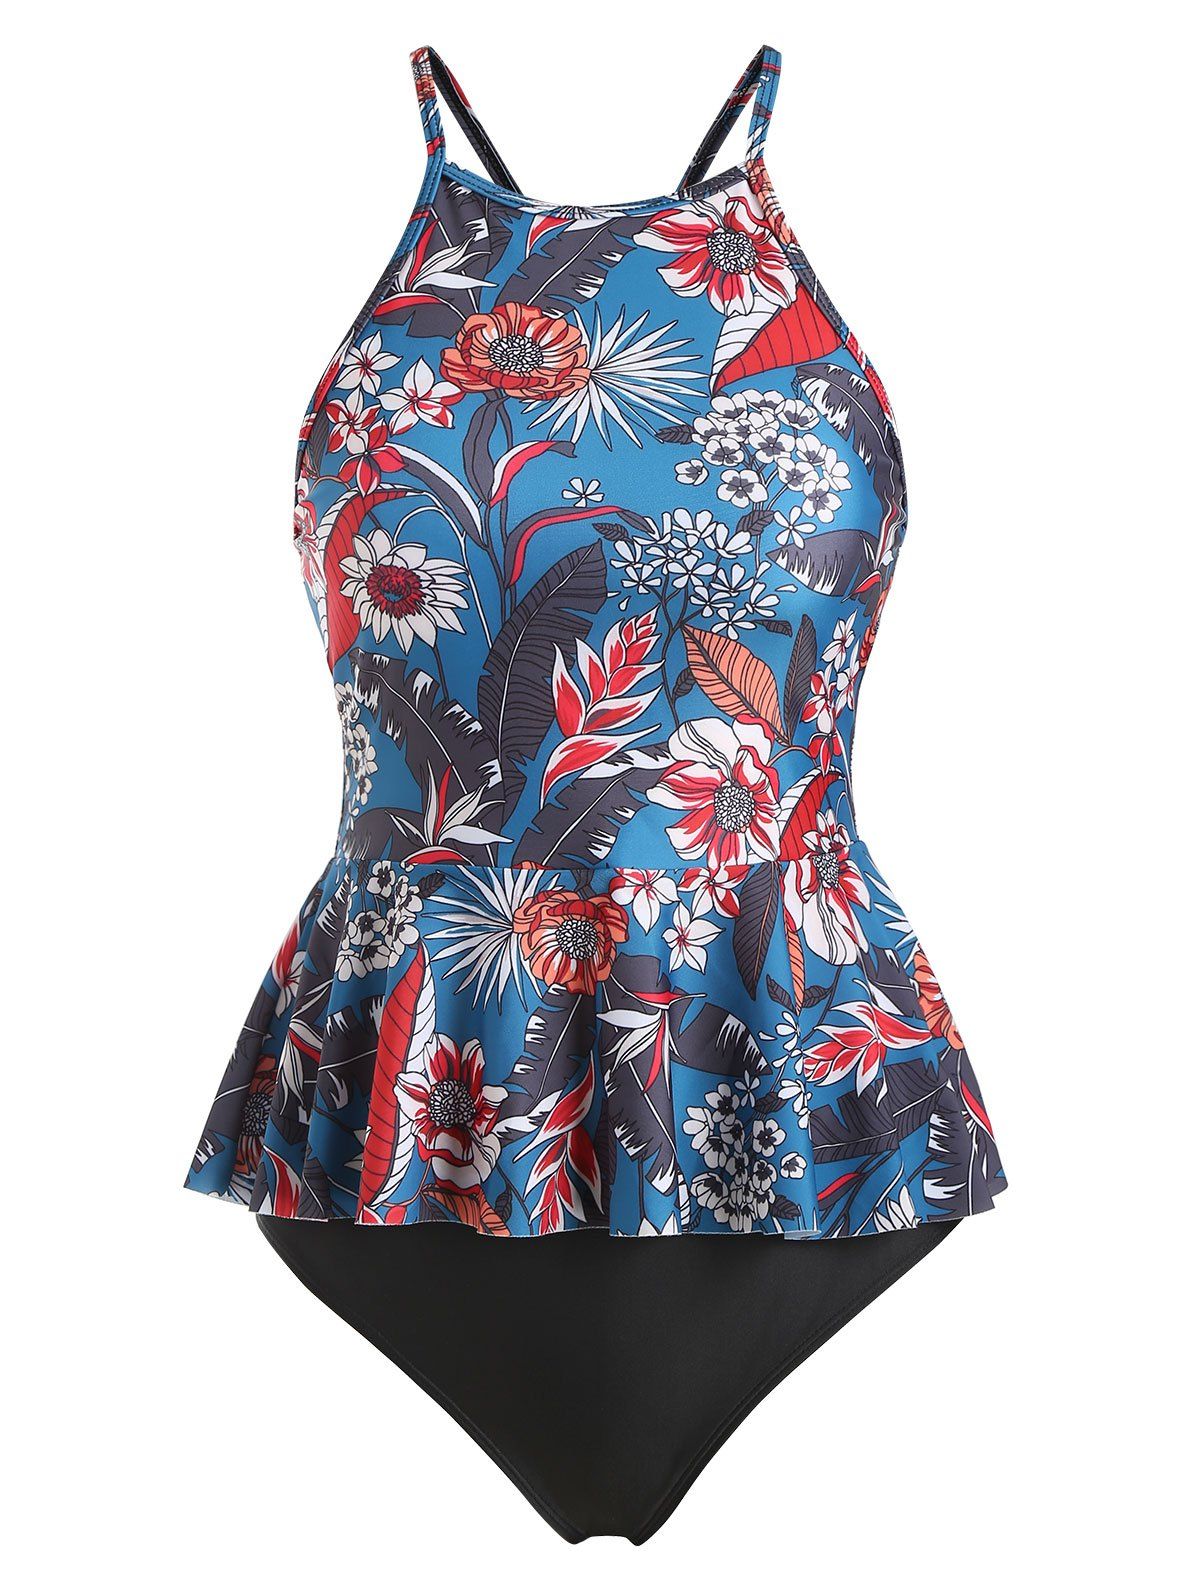 Flower Criss Cross Peplum Tankini Swimwear - multicolor XXL